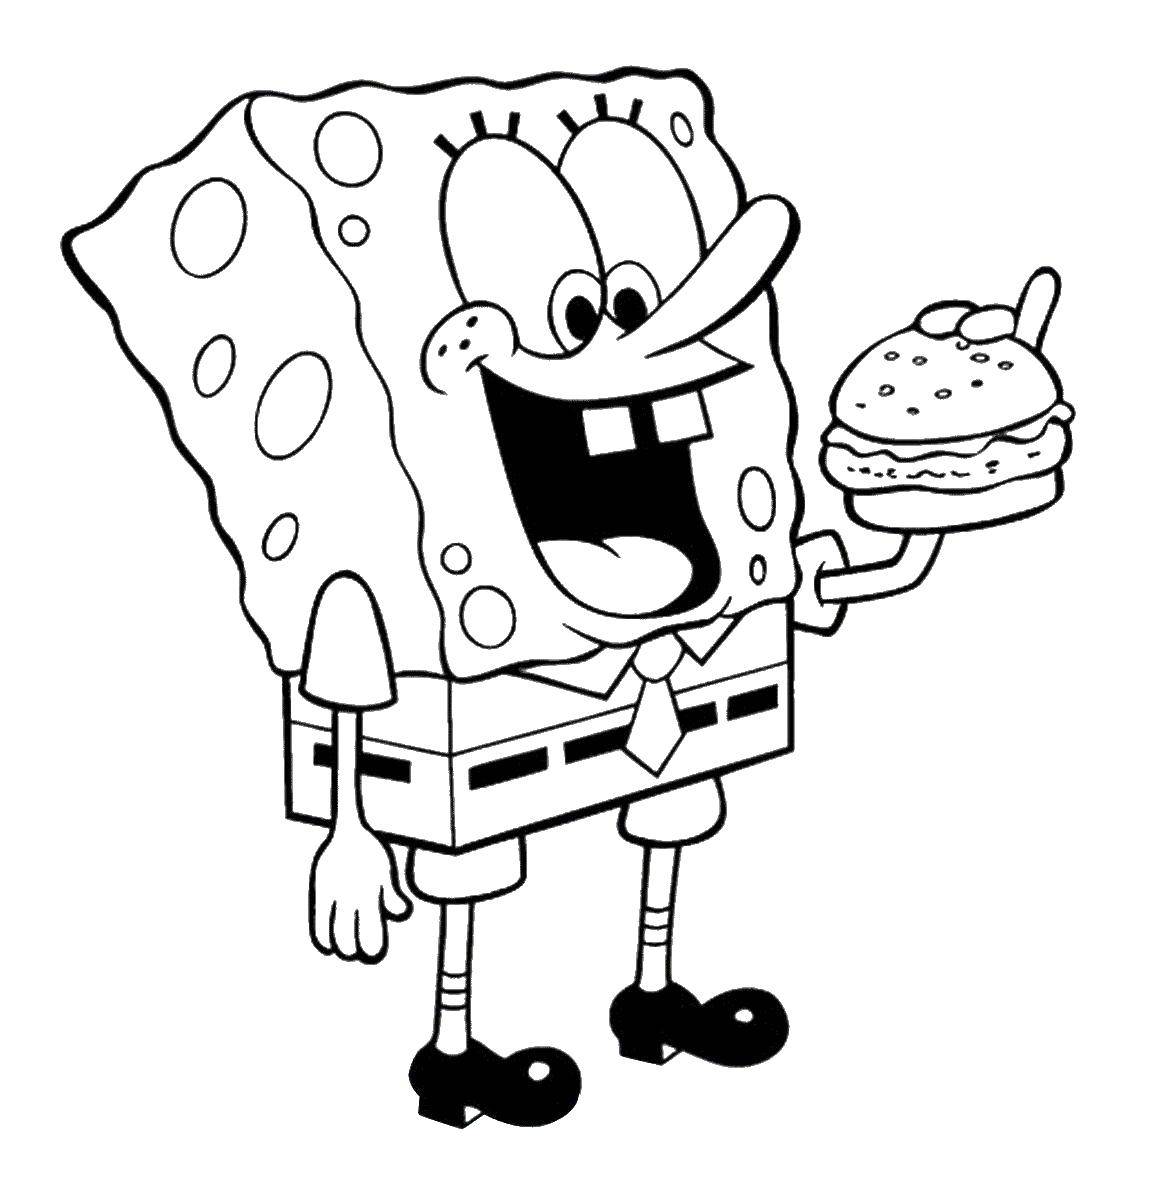 Coloring Spongebob square pants with a hamburger. Category Spongebob. Tags:  the spongebob, Patrick.